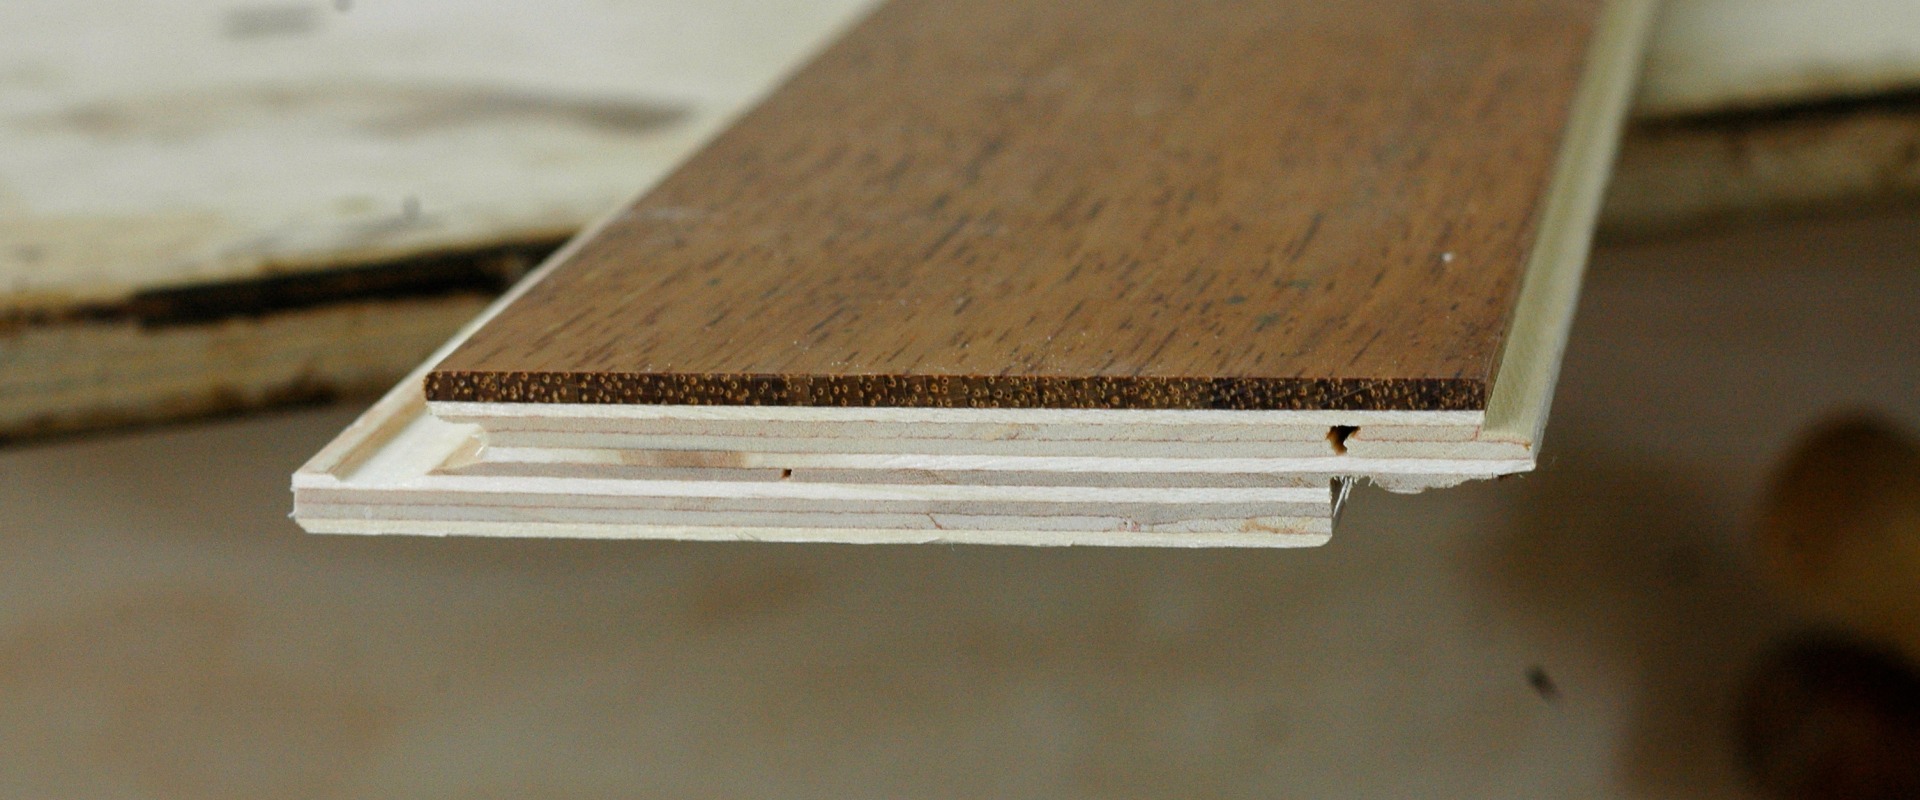 Can hardwood flooring be installed on concrete slab?